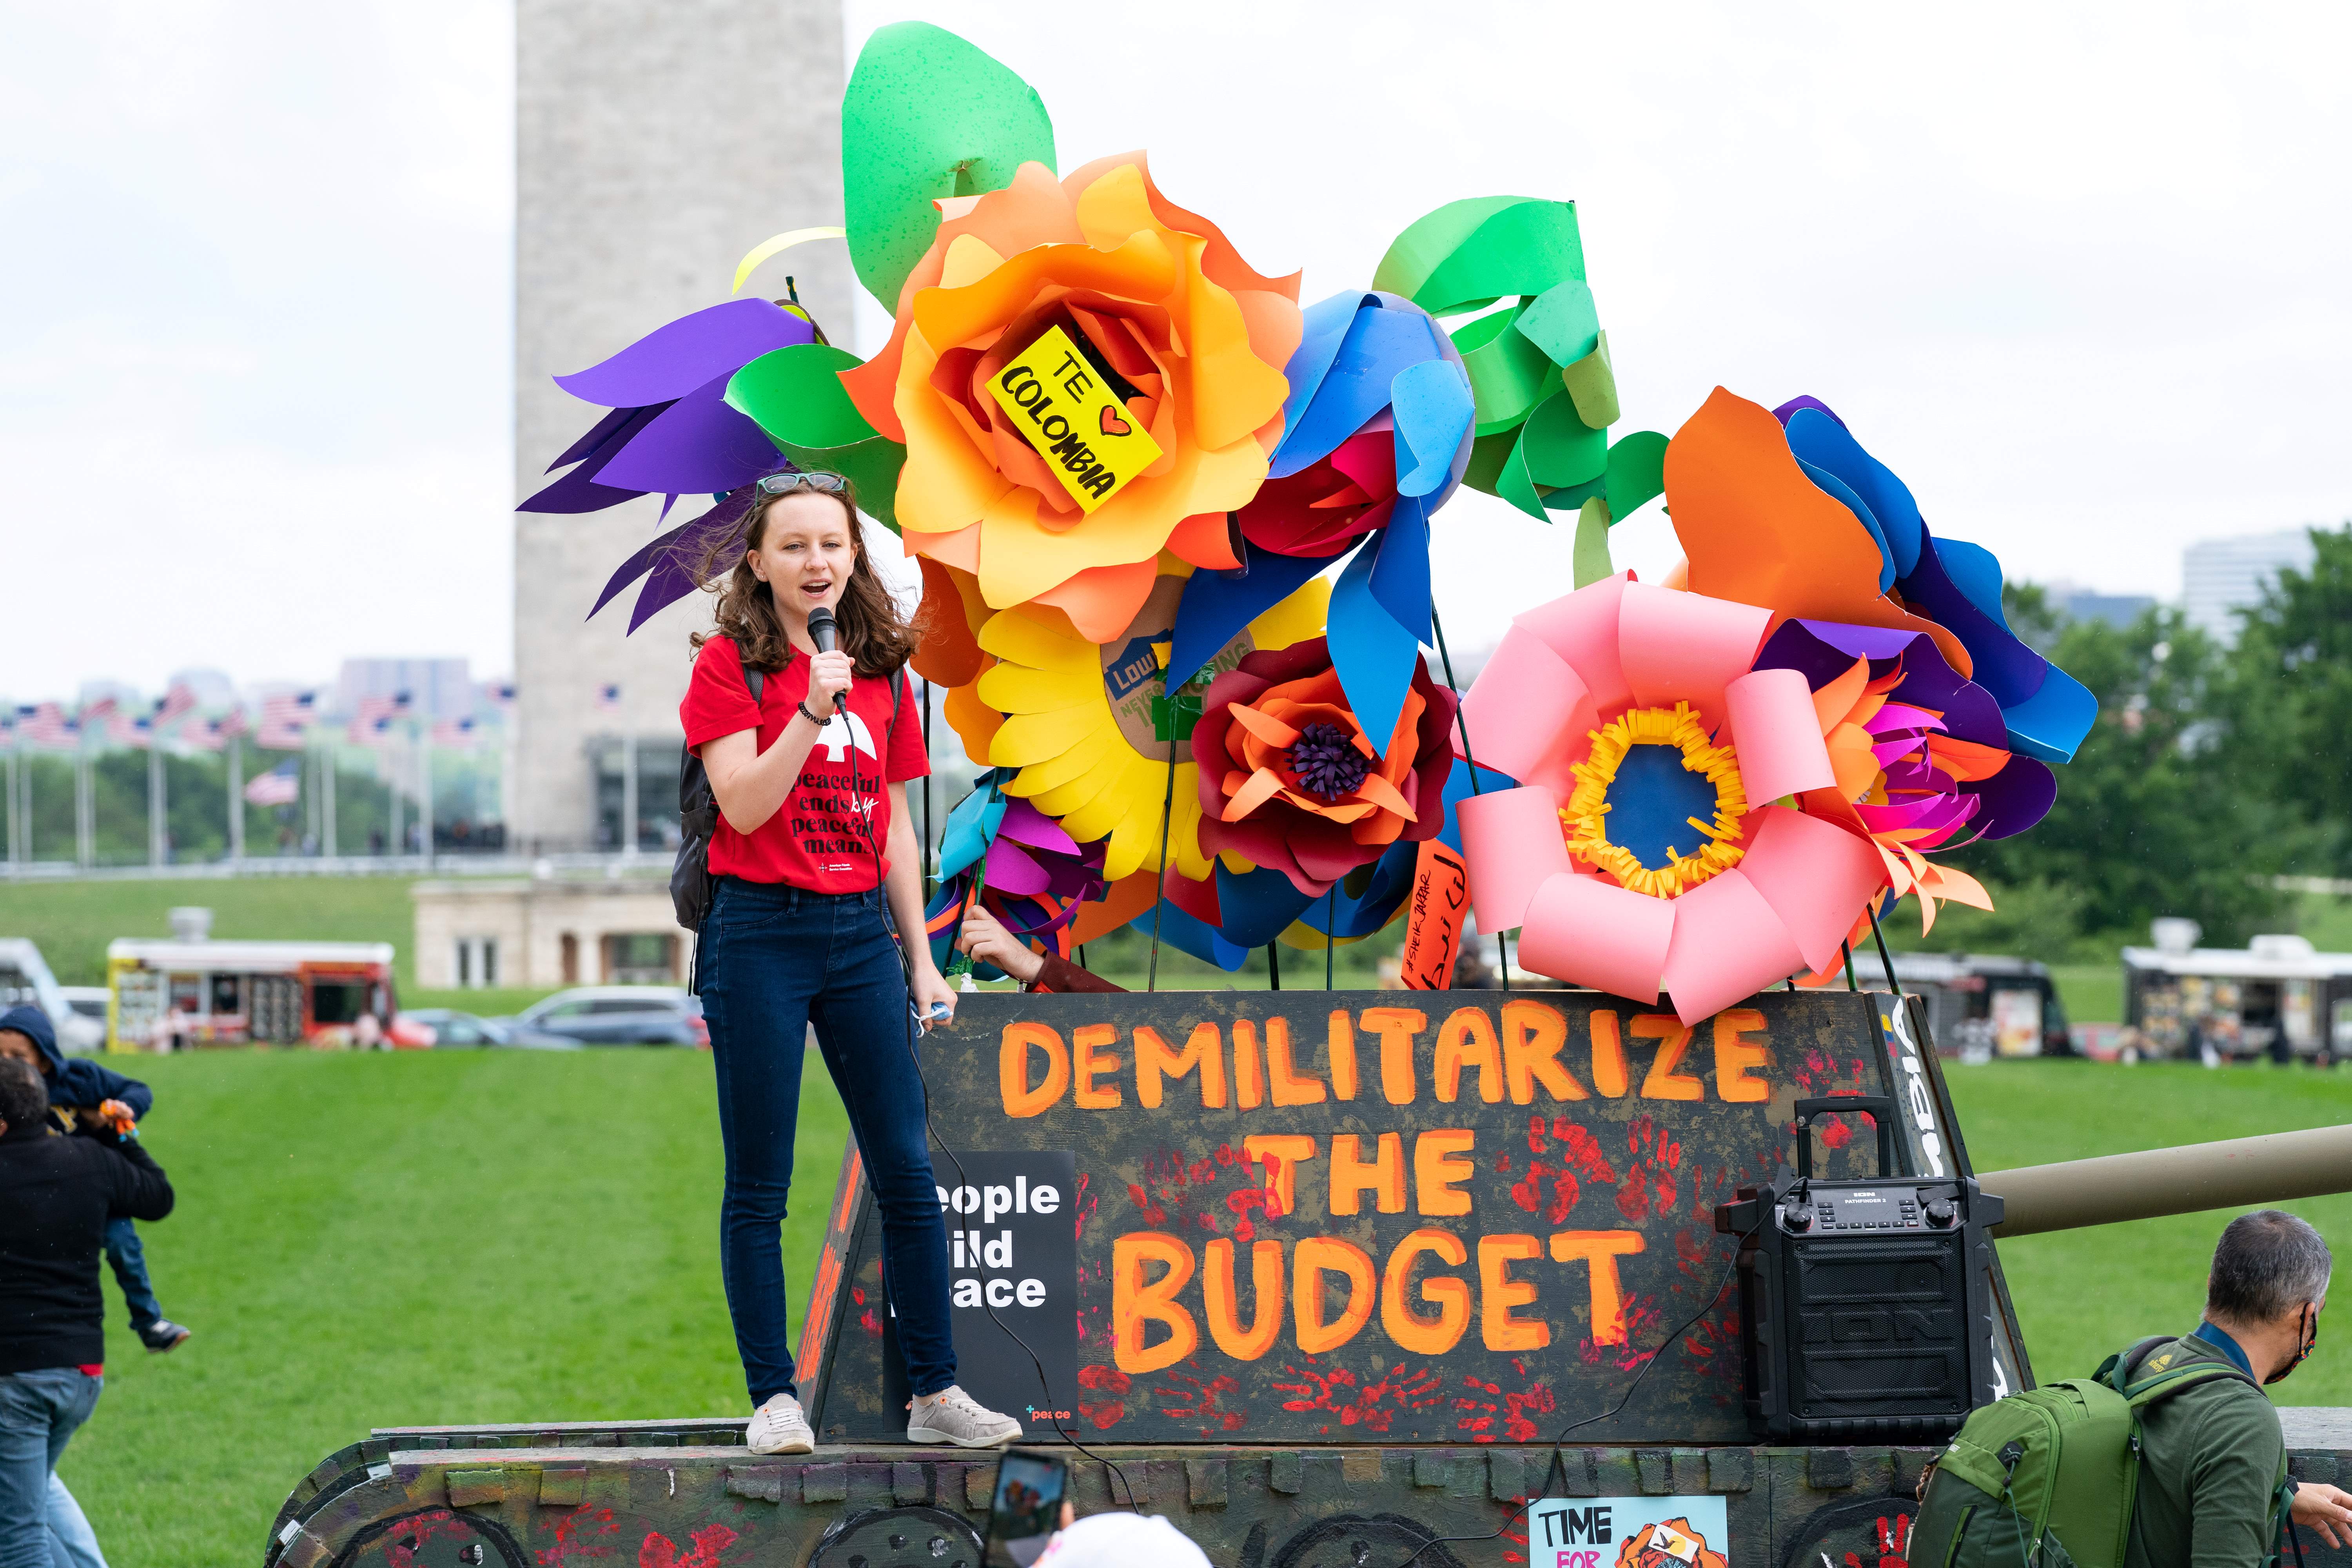 Demilitarize the Budget